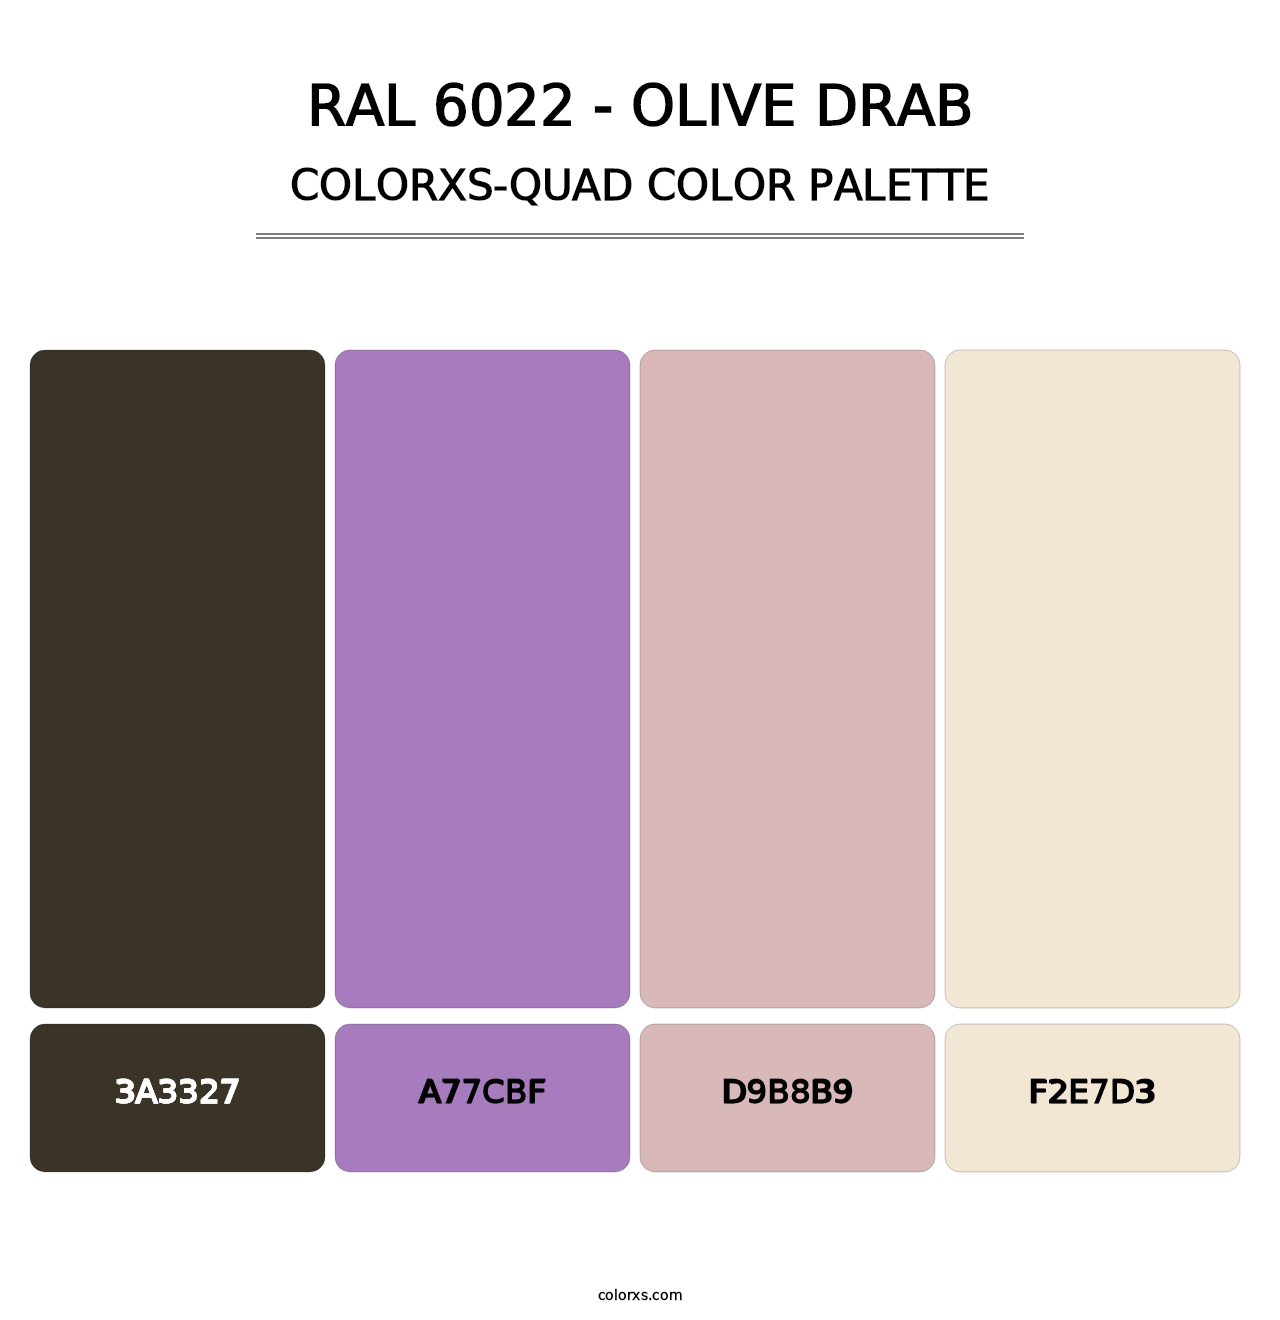 RAL 6022 - Olive Drab - Colorxs Quad Palette